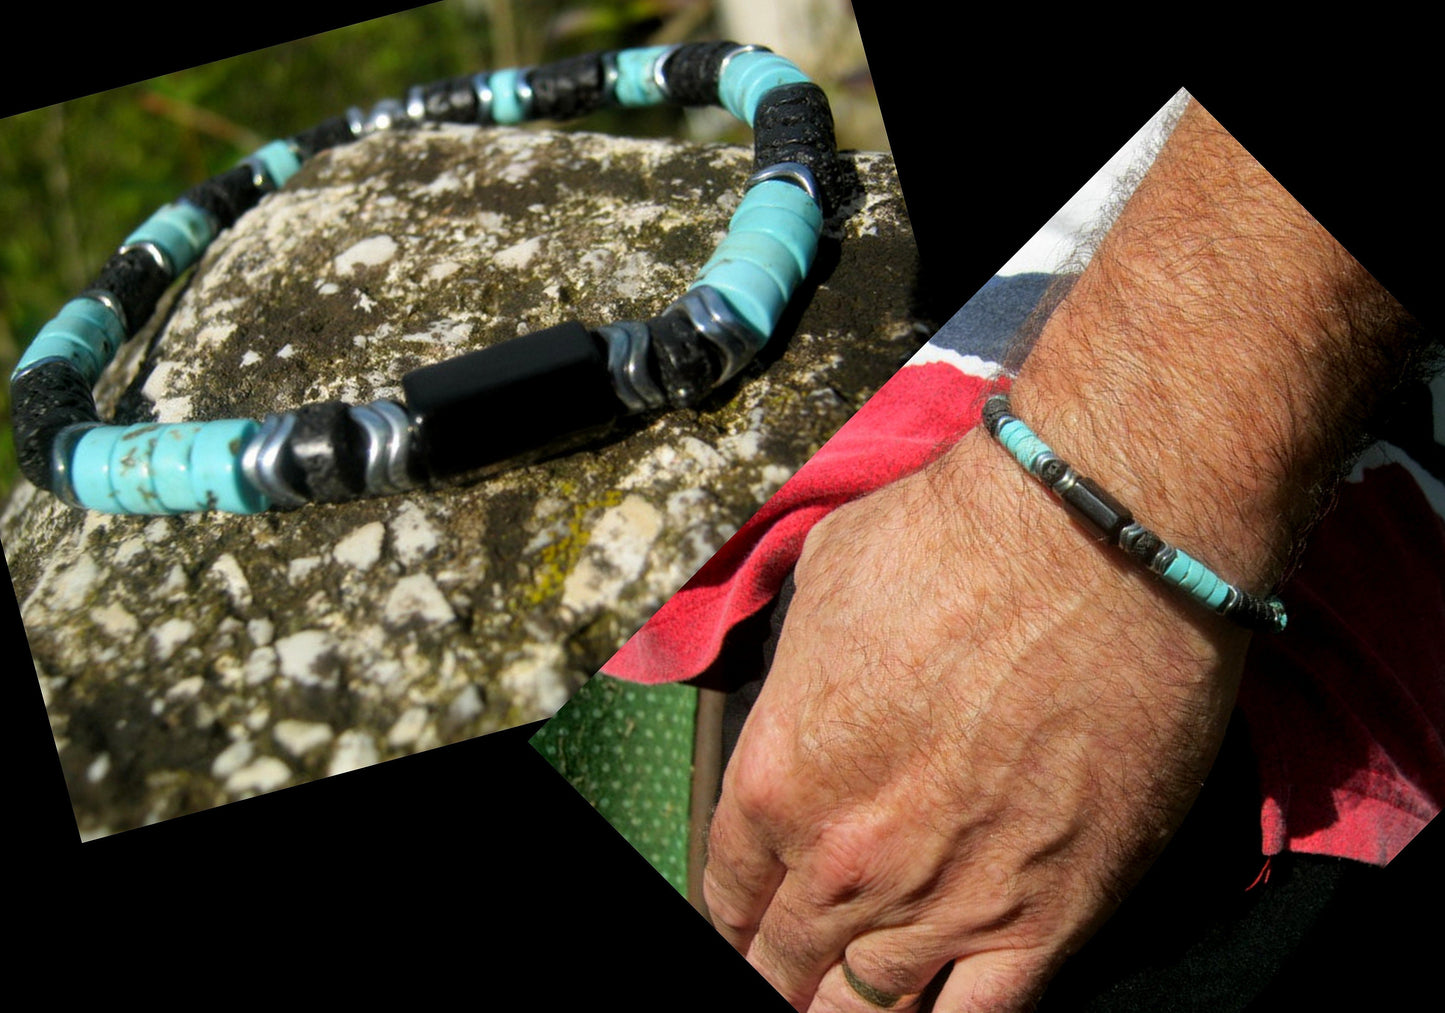 Bracelet african TURQUOISE Lava heishi Hematite Tourmaline Healing stone, handmade bracelet men gift